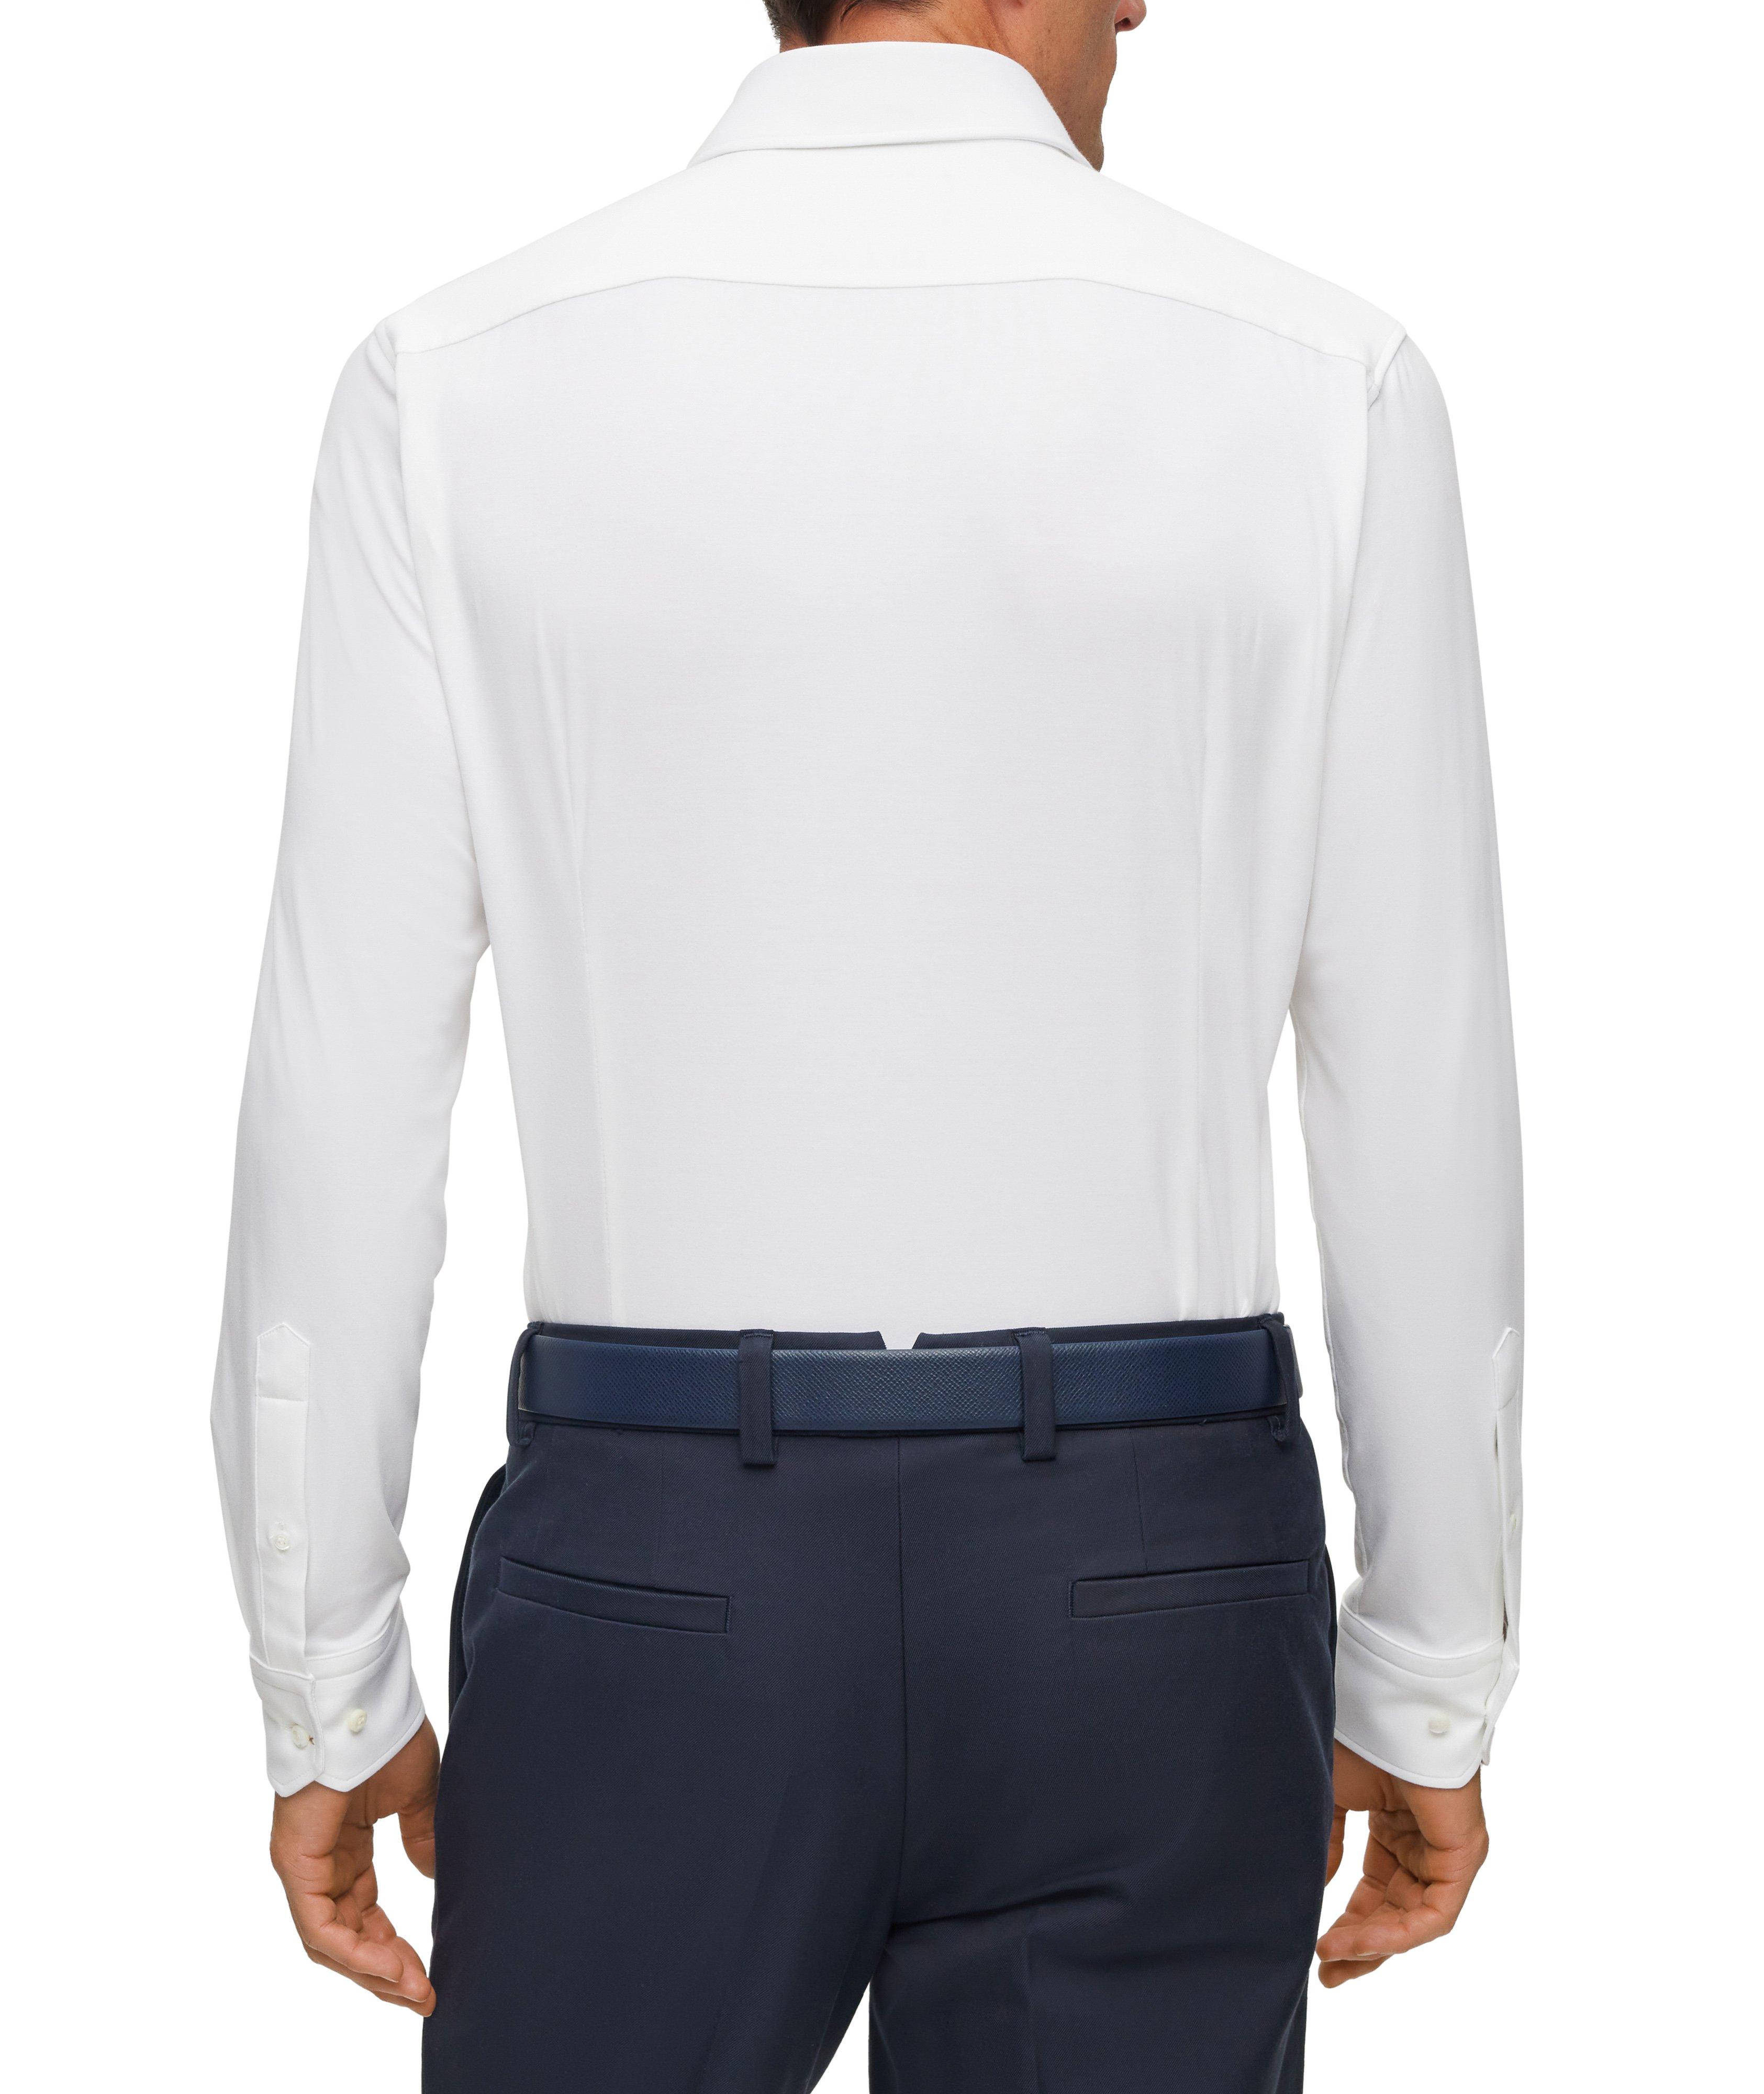 Structured Stretch Cotton-Blend Dress Shirt image 2